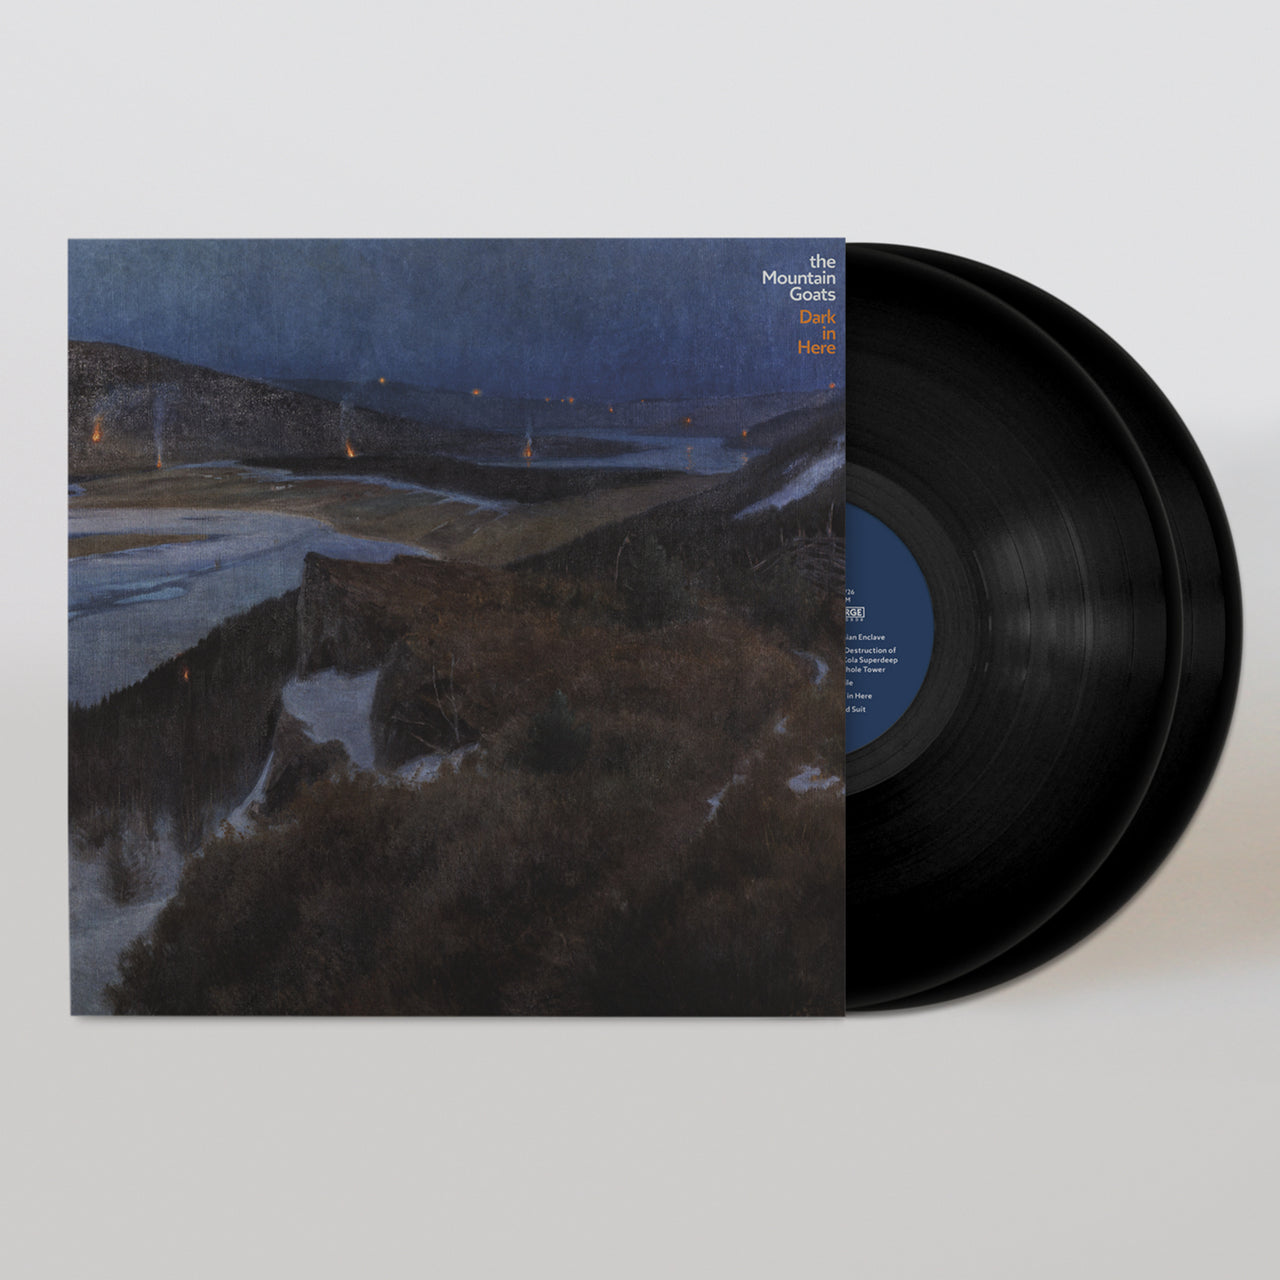 The Mountain Goats: Dark In Here Vinyl LP